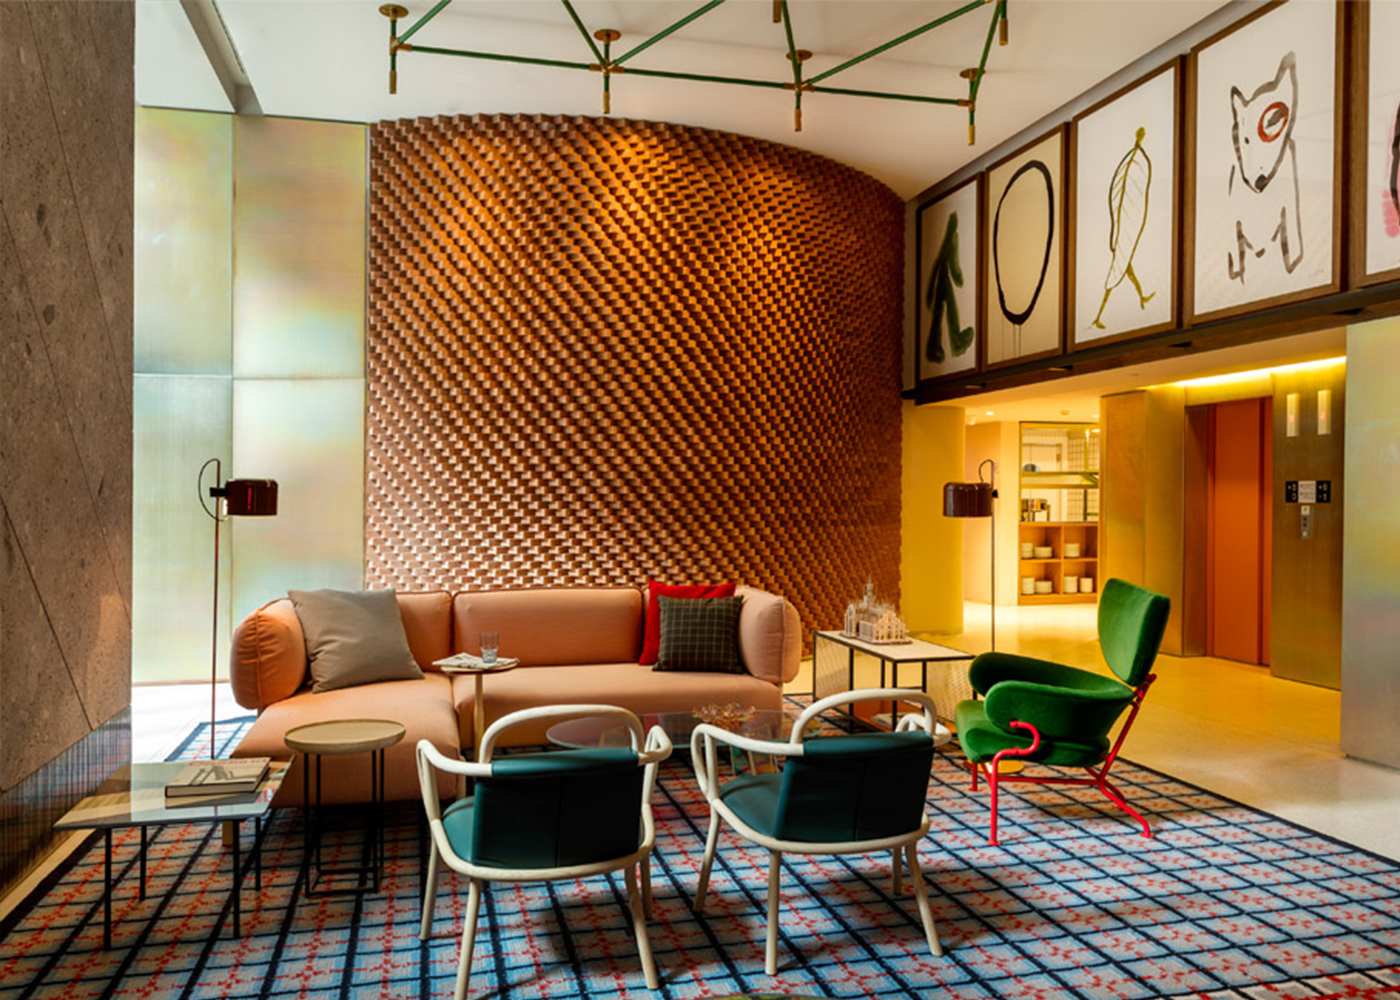 patricia-urquiola-room-mate-hotels-interior-design-milan_dezeen_936_0